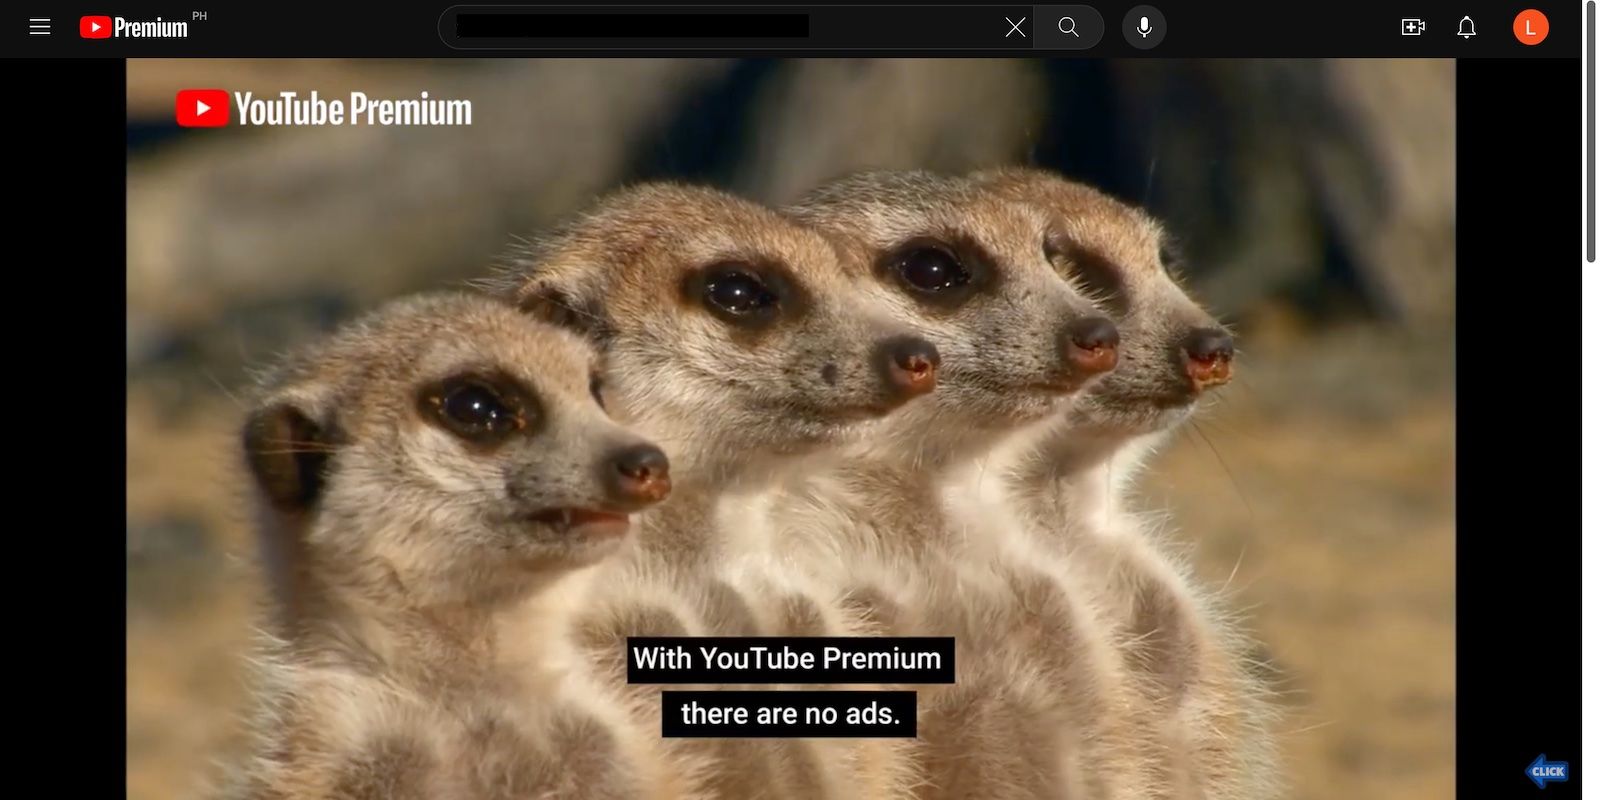 Ad Featuring Meerkats for YouTube Premium 